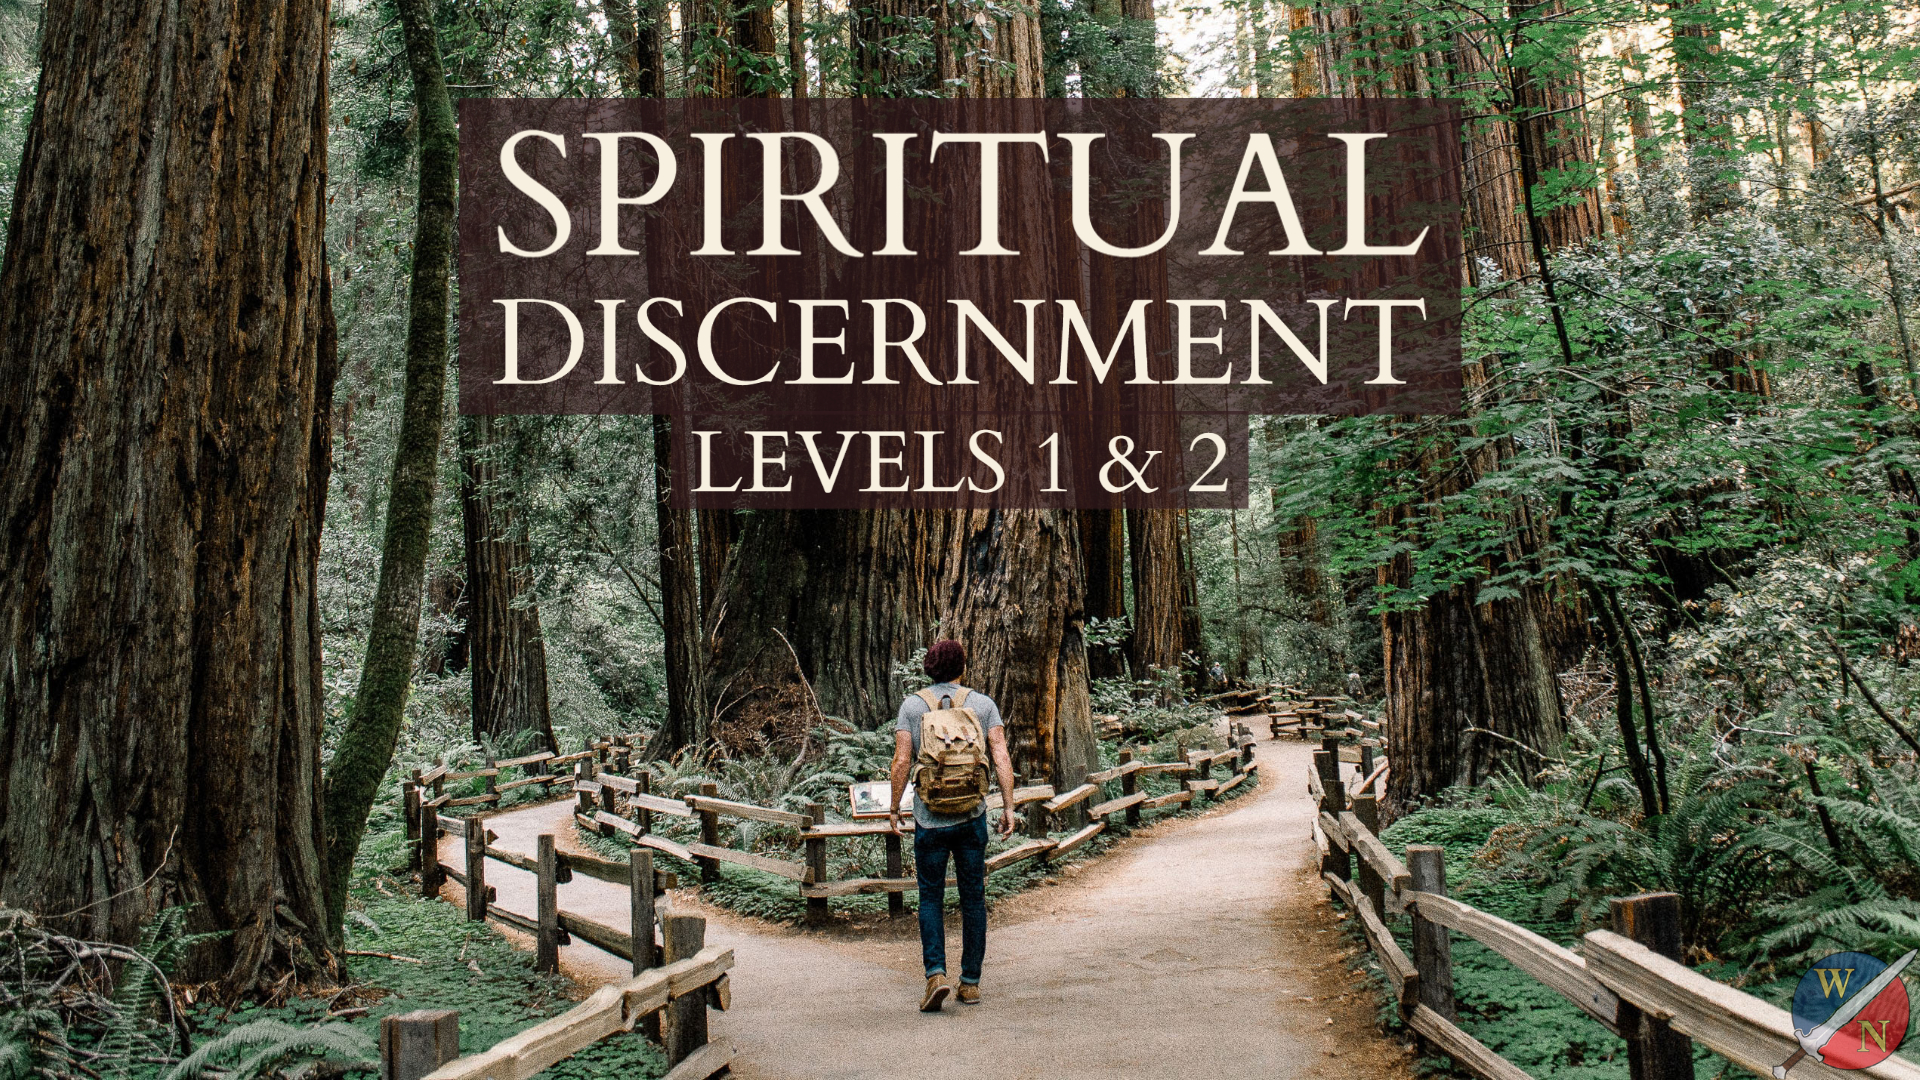 Spiritual Discernment course image